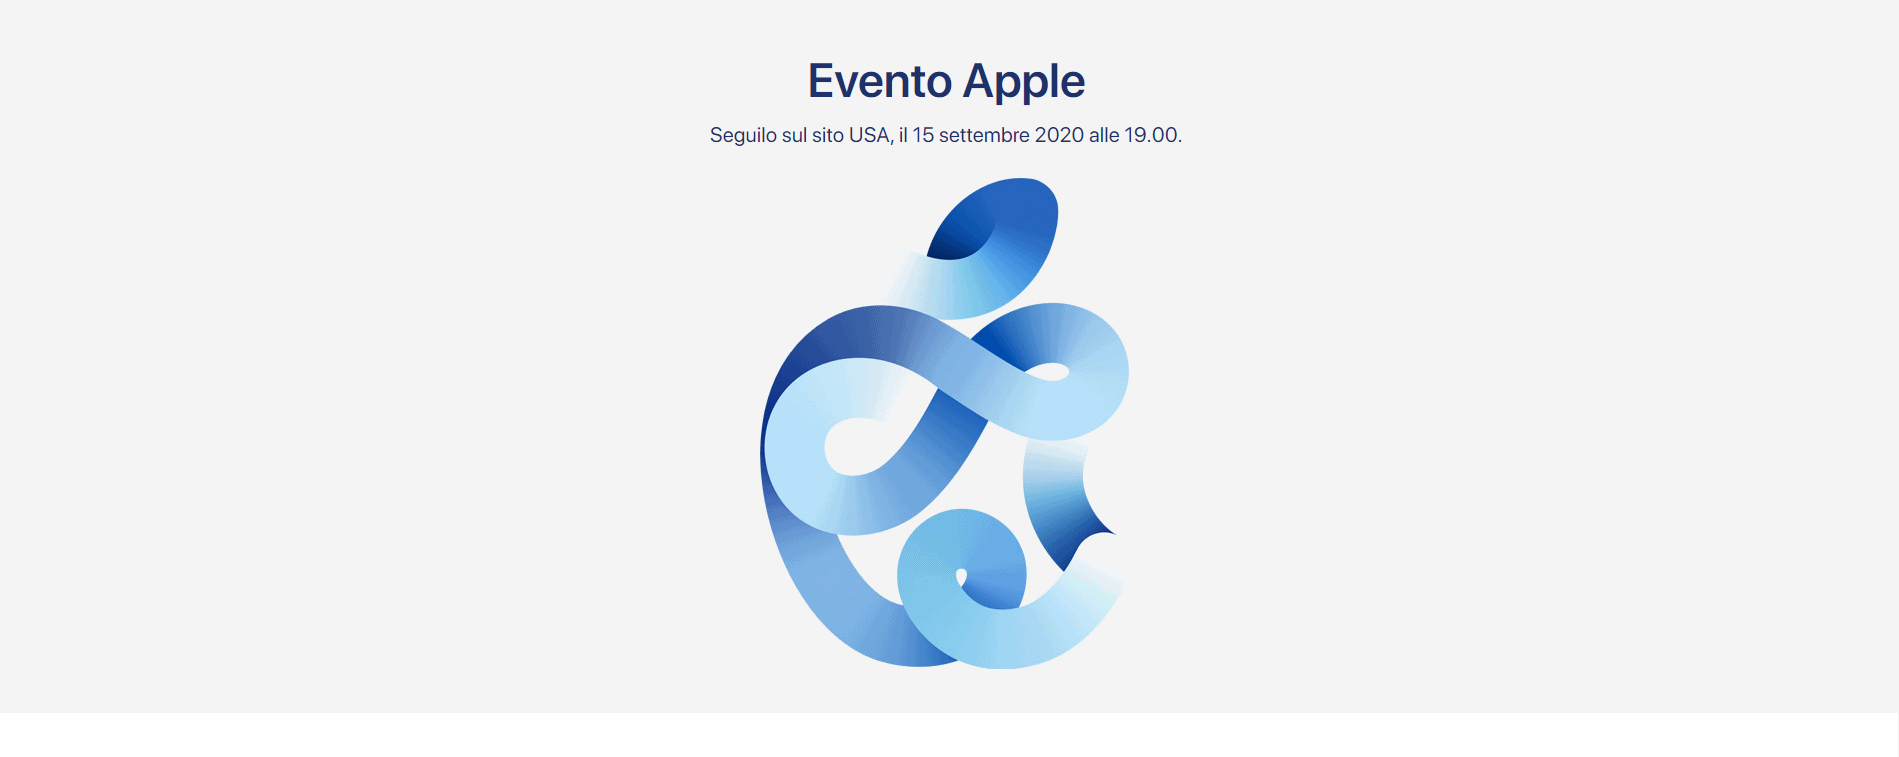 Evento Apple: iPhone 12, Watch 6 e nuovo iPad